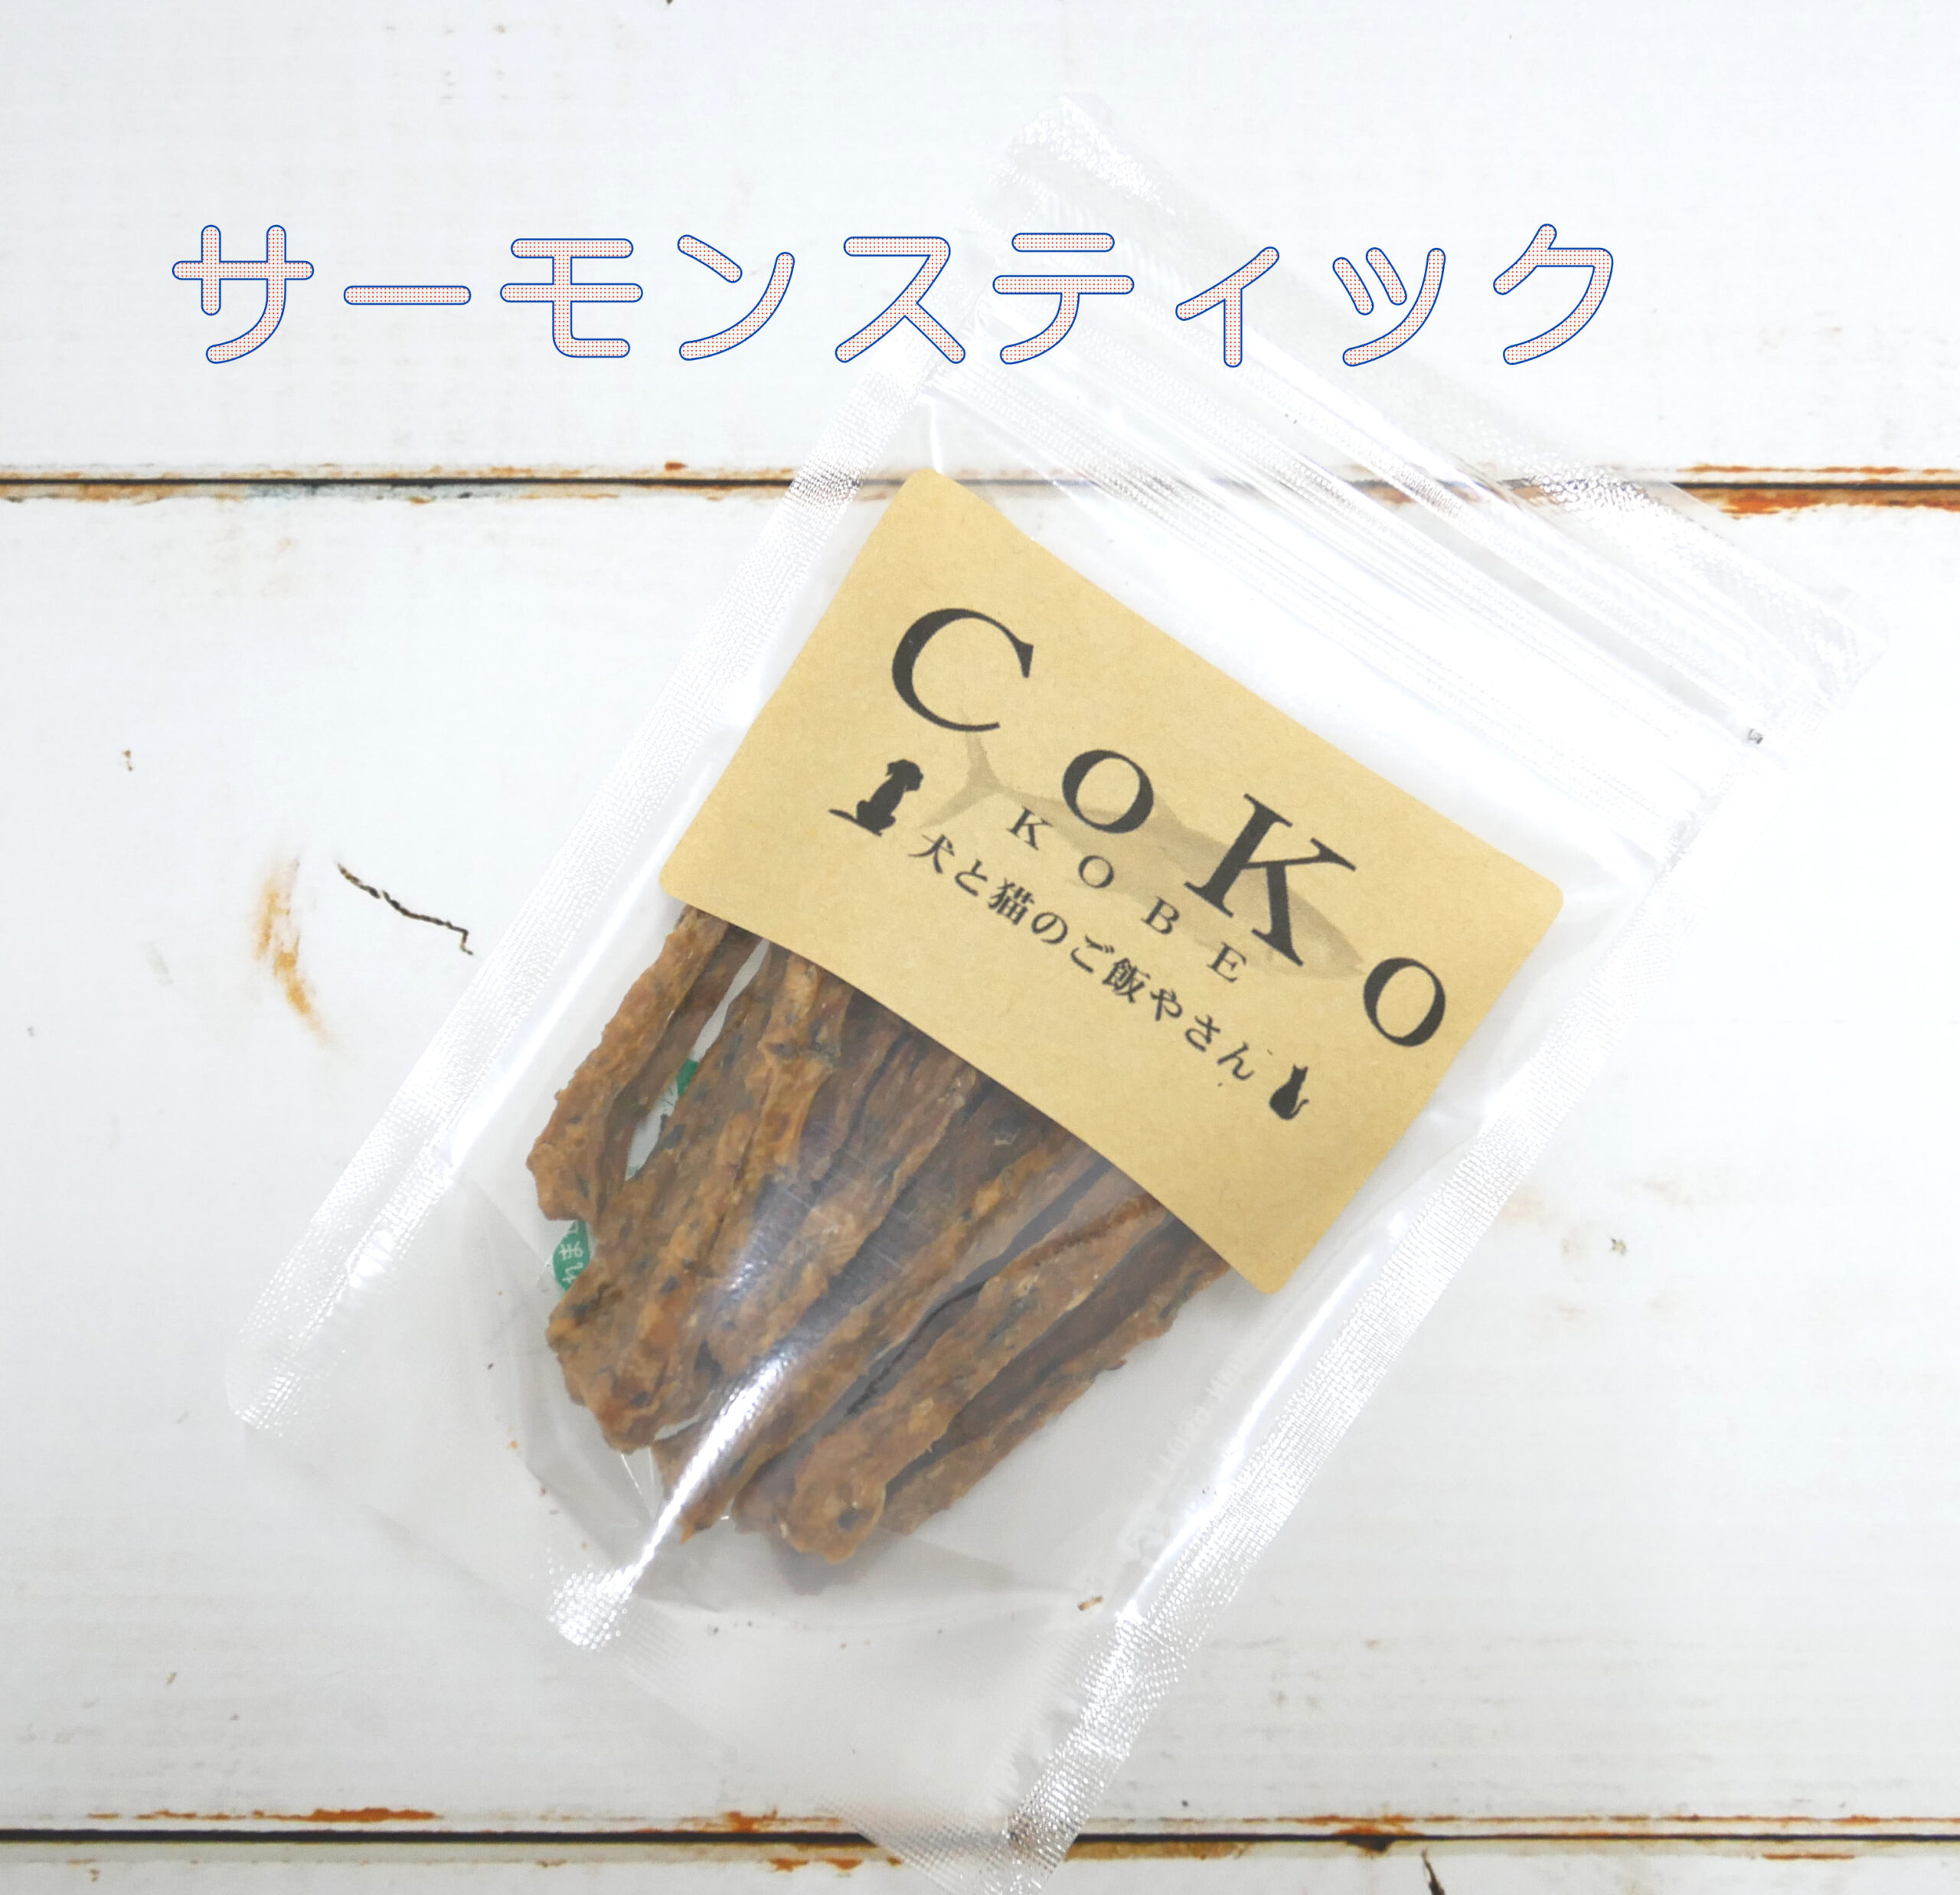 CoKoオリジナル 犬おやつ 魚の素材 無添加 国産 サーモンスティック(35g) Salmon stick for dogsアイキャッチ画像